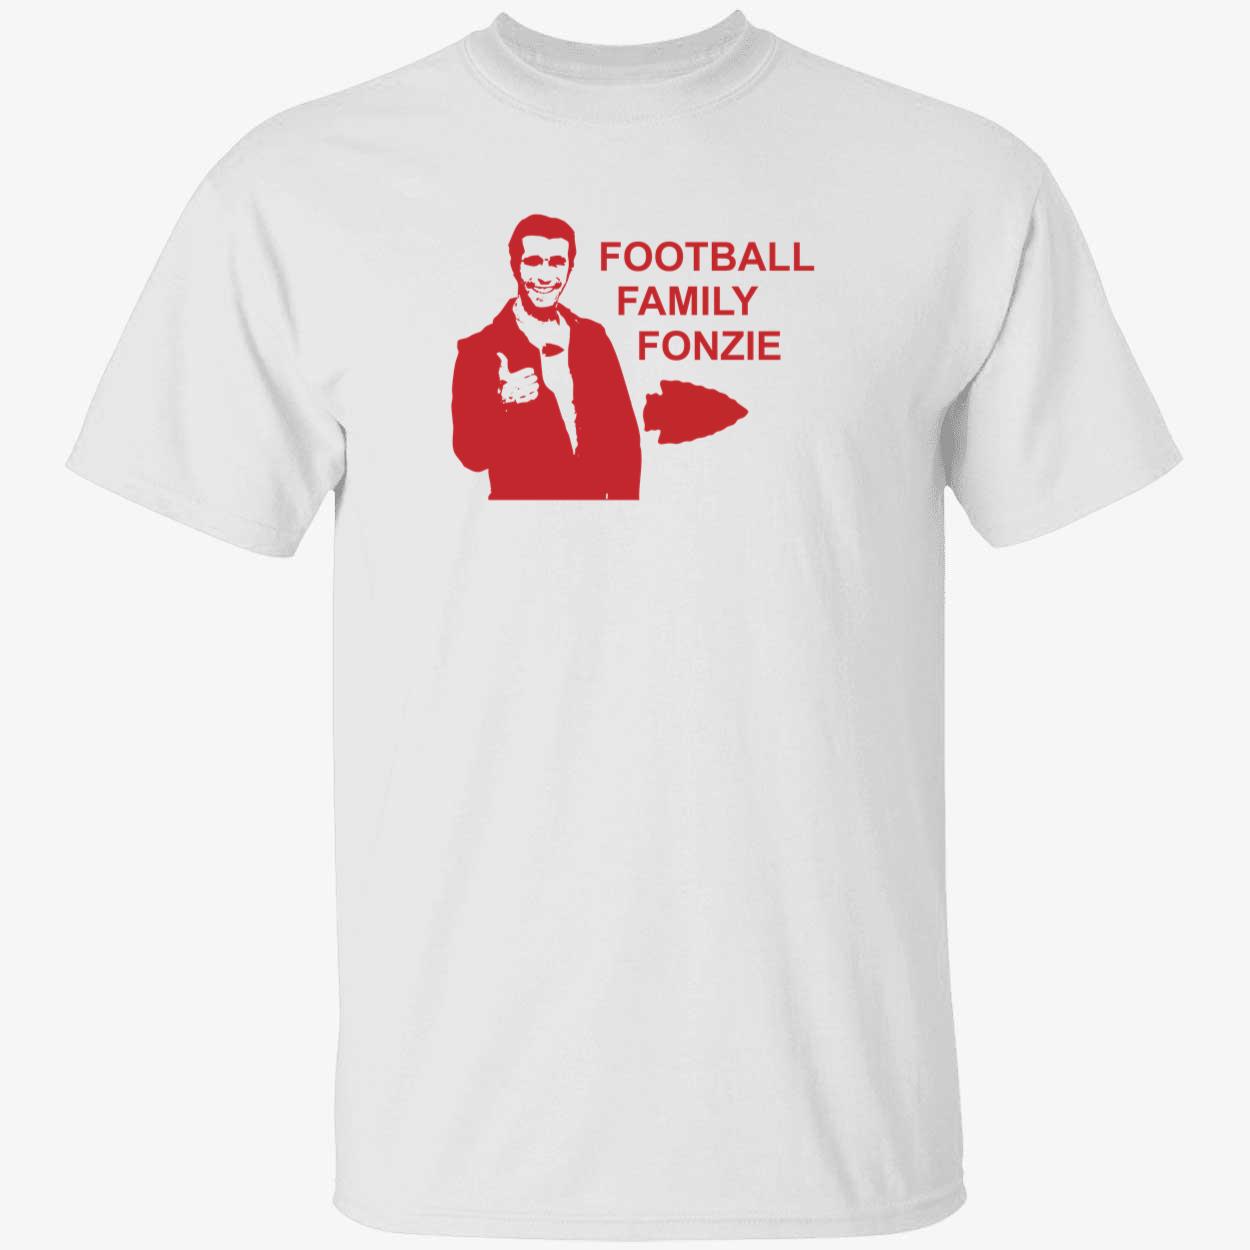 aaronladd0 Football Family Fonzie Shirt